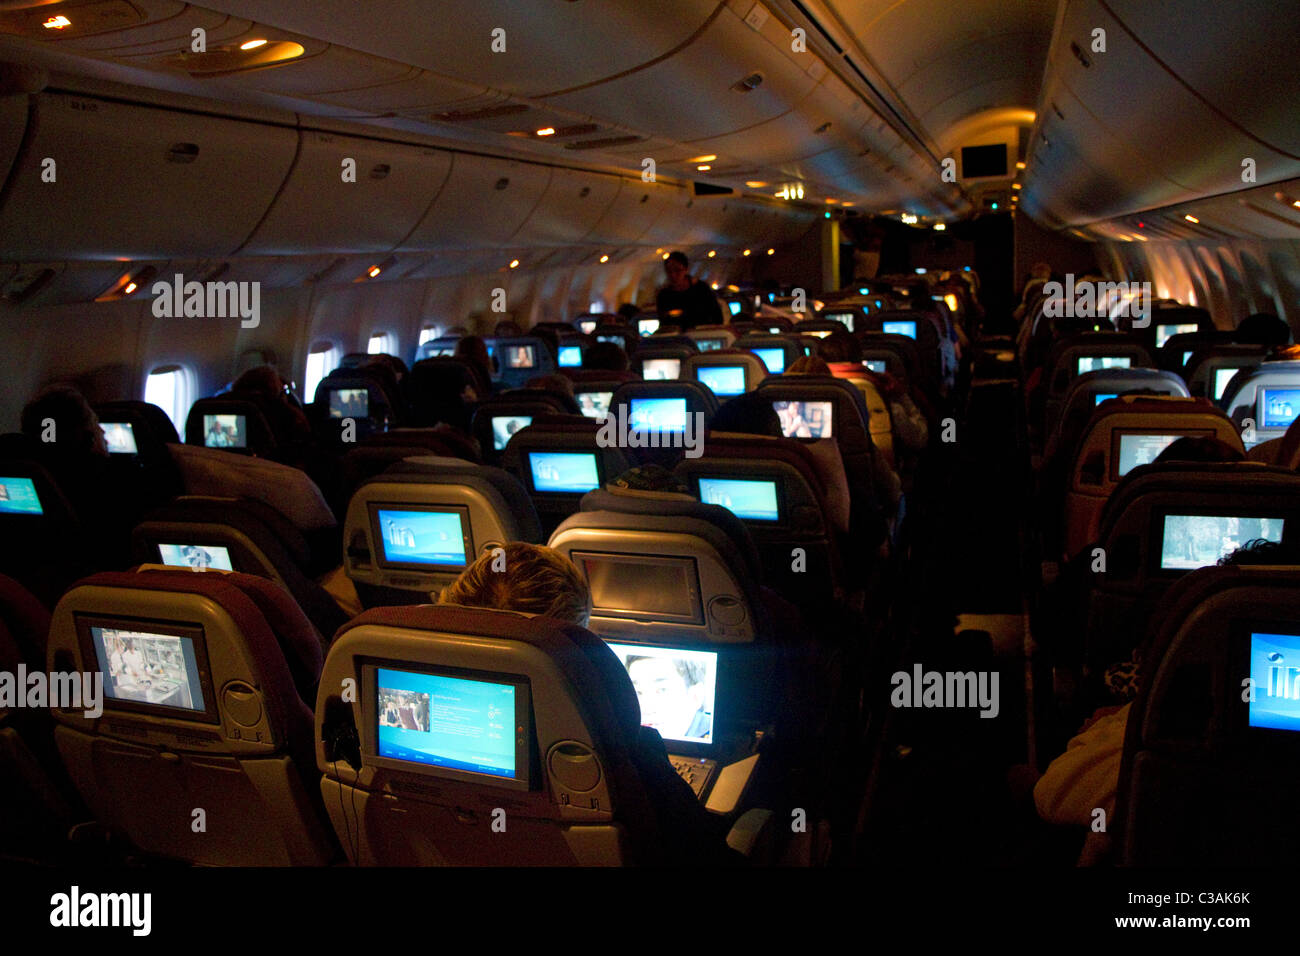 Interior of a Boeing 767 aircraft coach class cabin. Stock Photo